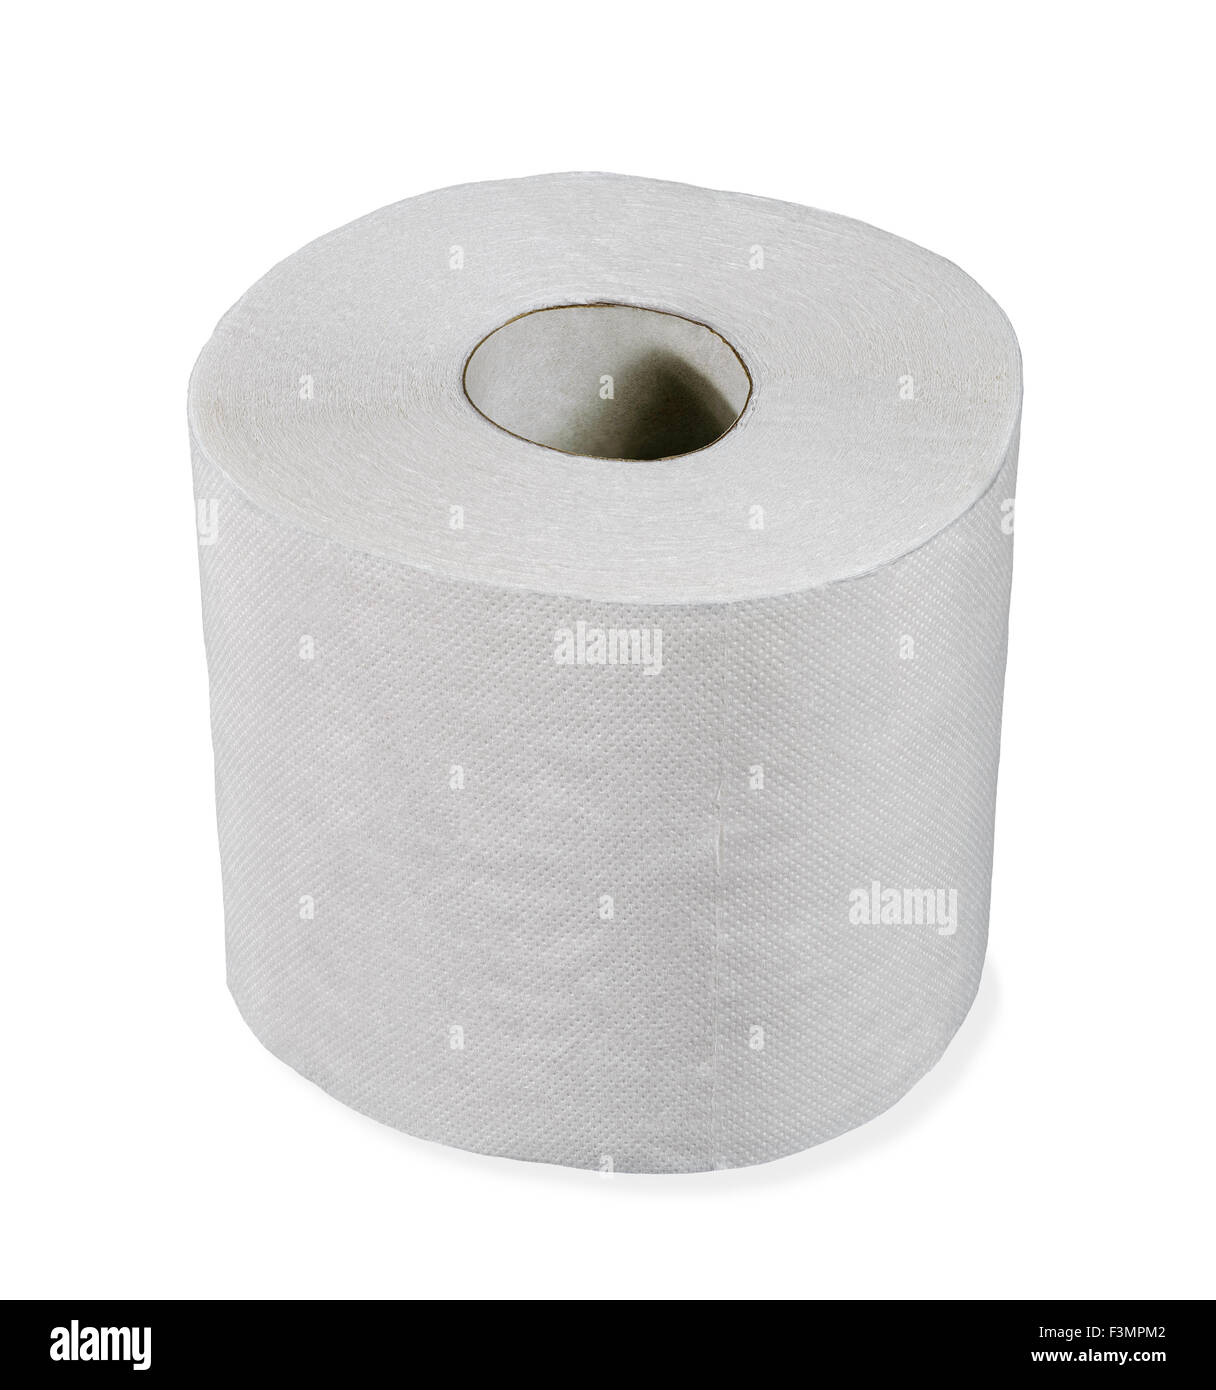 Toilet paper tissue roll Stock Photo